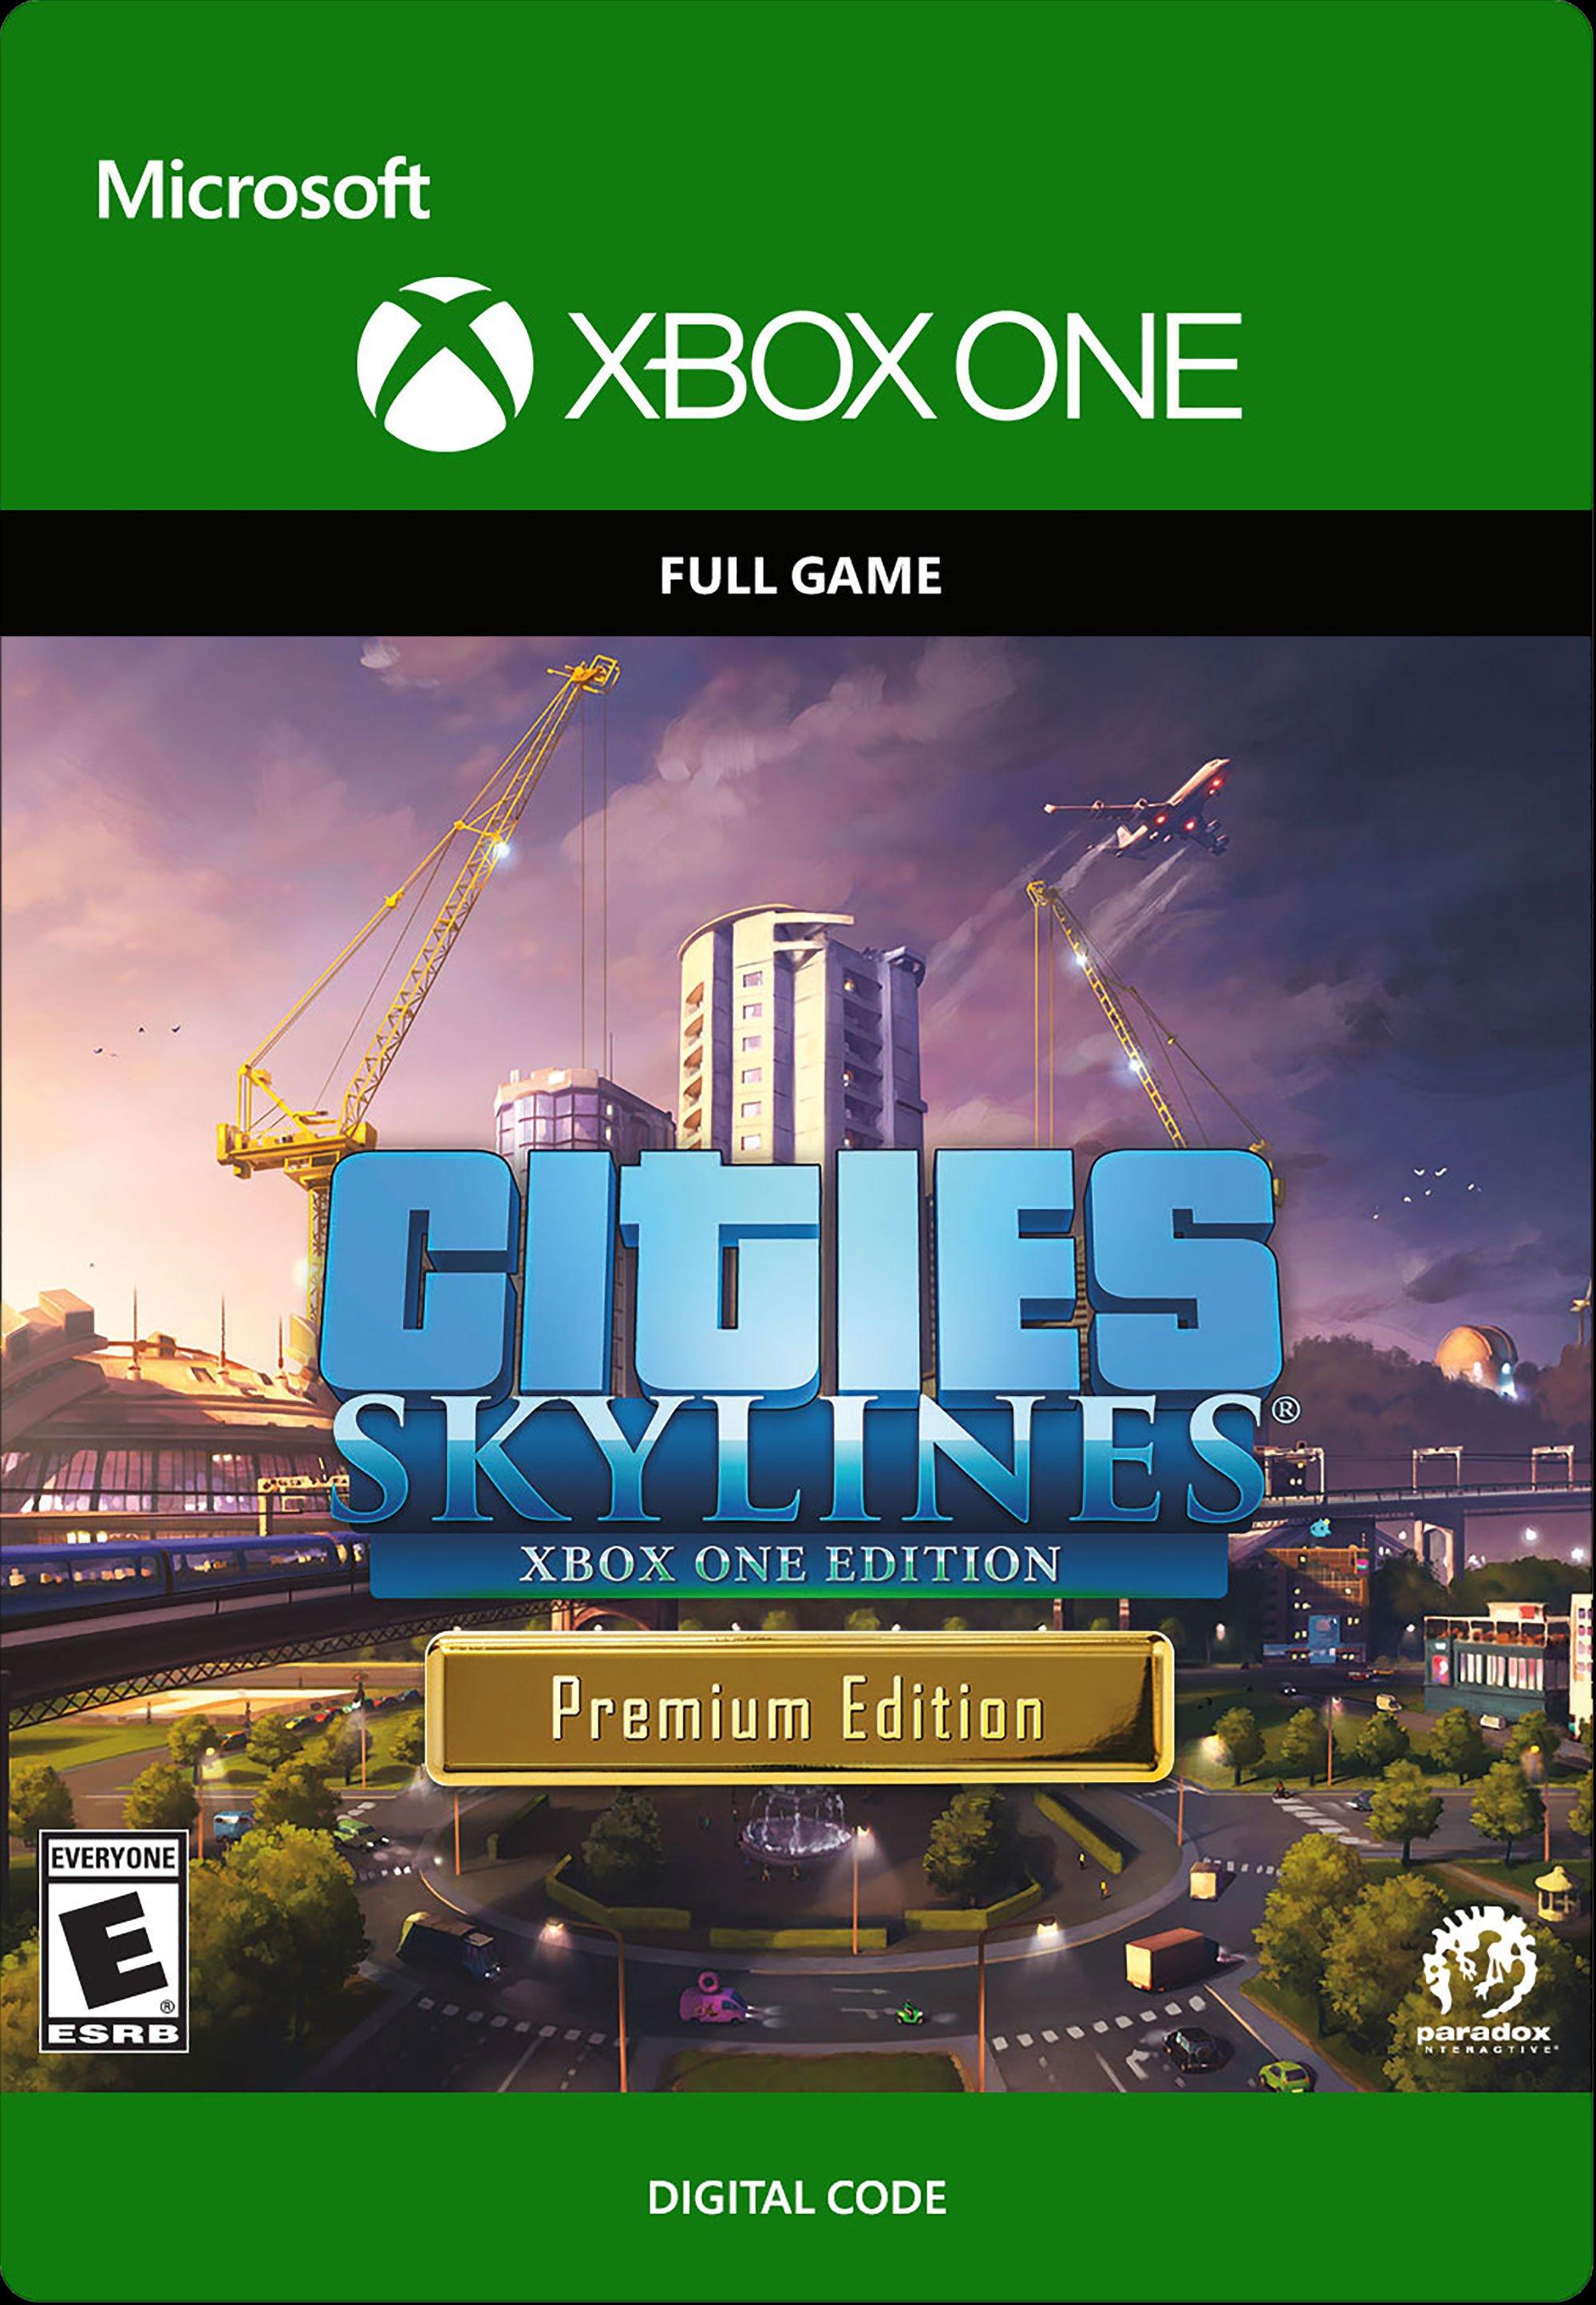 Comprar o Cities: Skylines - Mayor's Edition